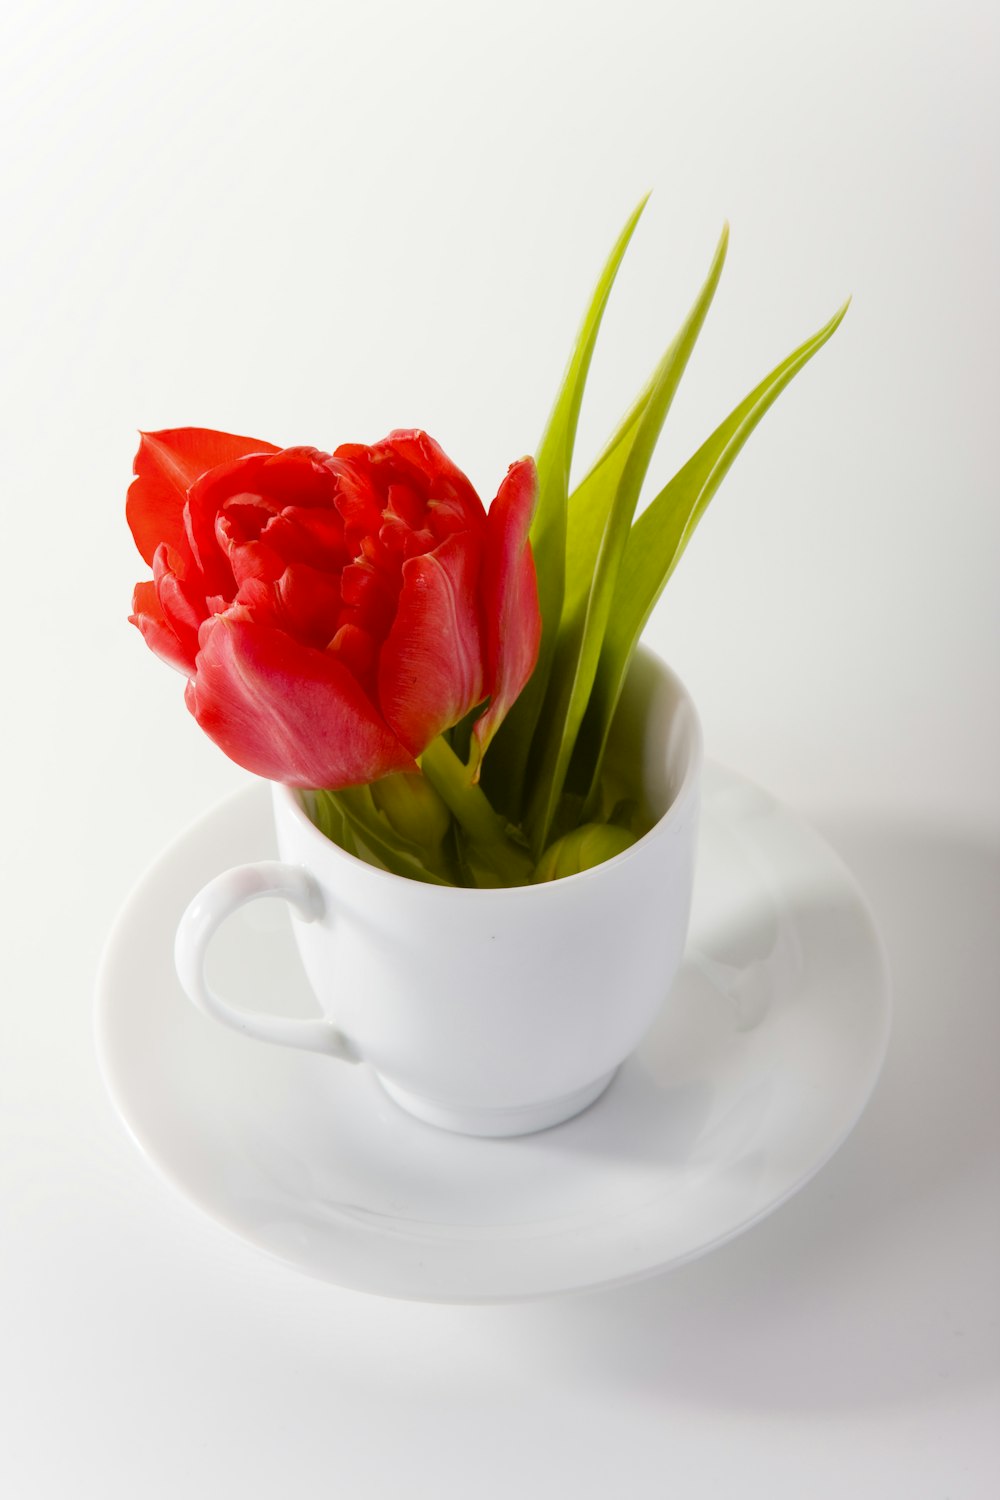 rosa roja en taza de té de cerámica blanca en platillo